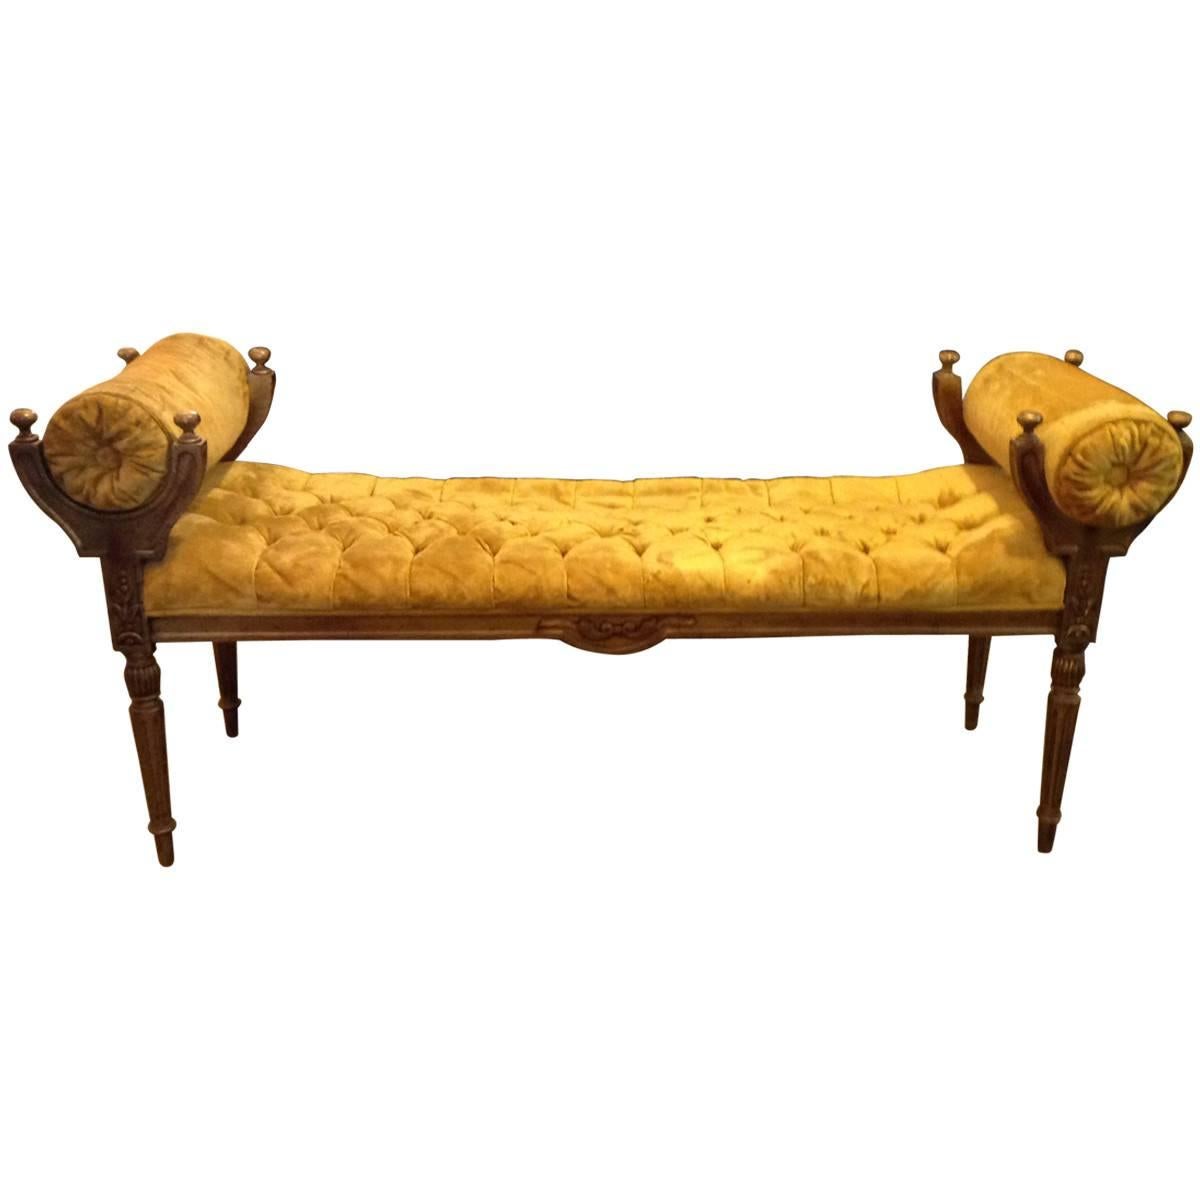 Traditional Neoclassical Style Velvet Upholstered Bench